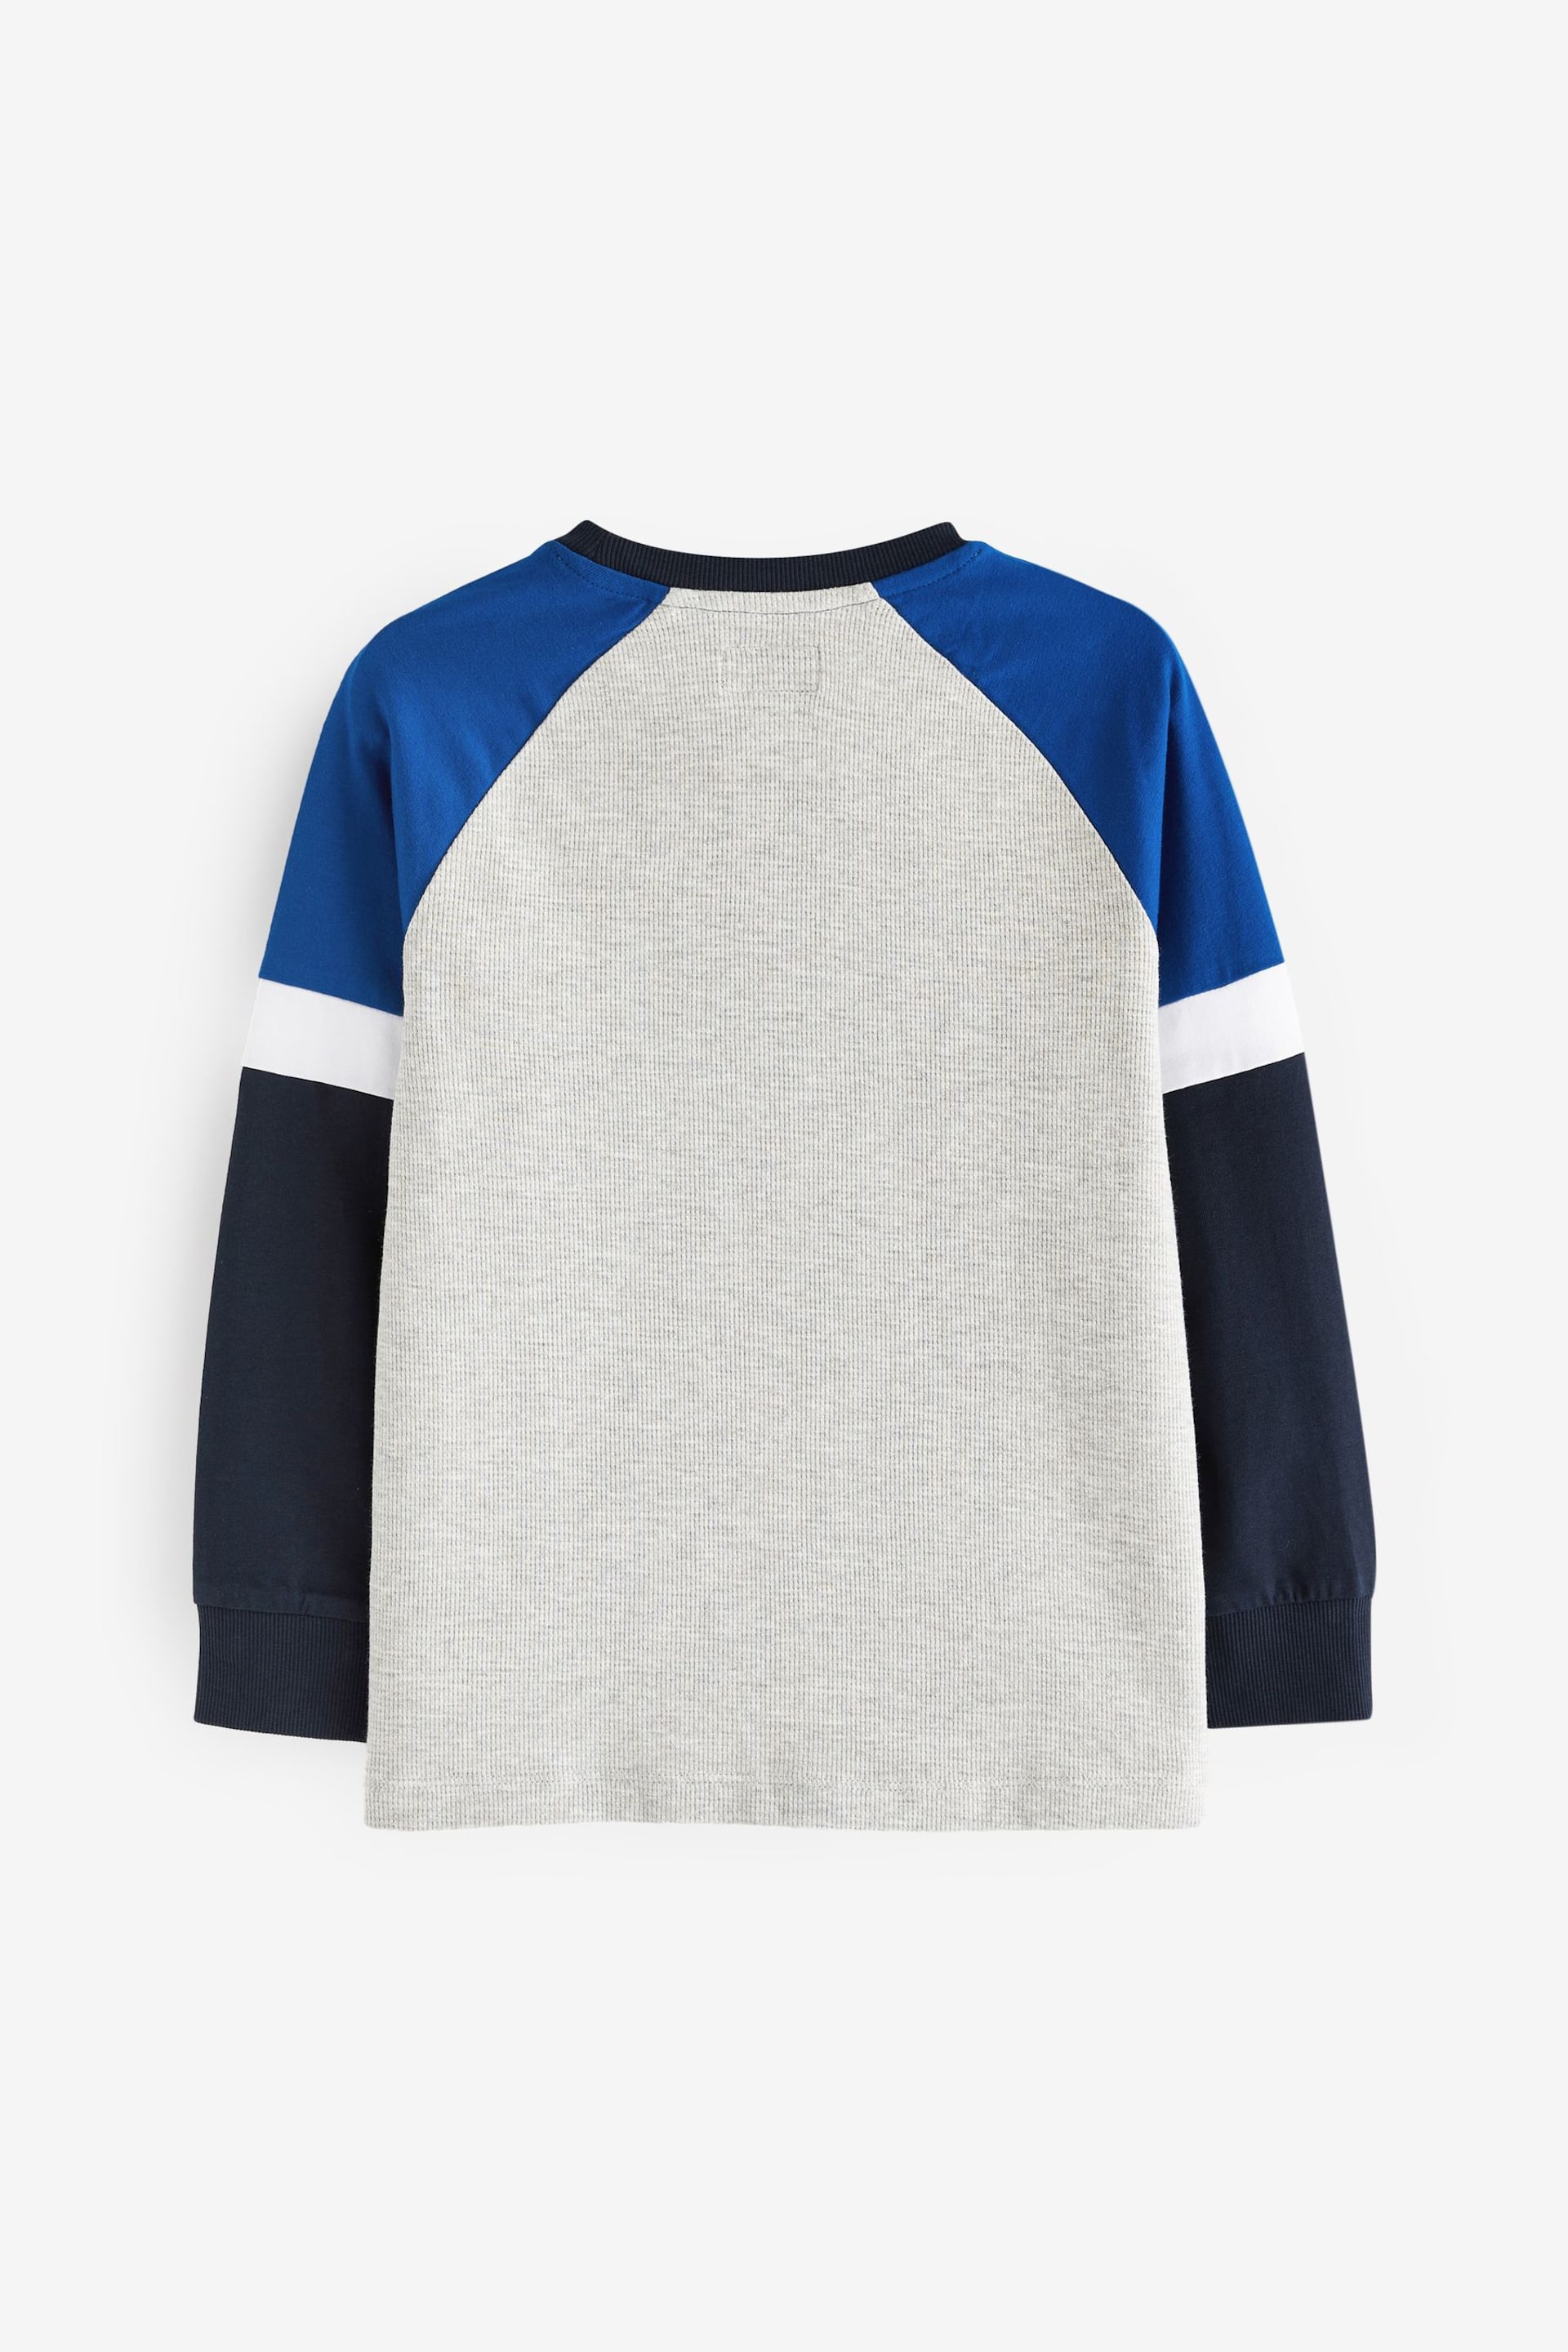 Blue/Grey Marl Long Sleeve Colourblock T-Shirts 3 Pack (3-16yrs) - Image 2 of 3